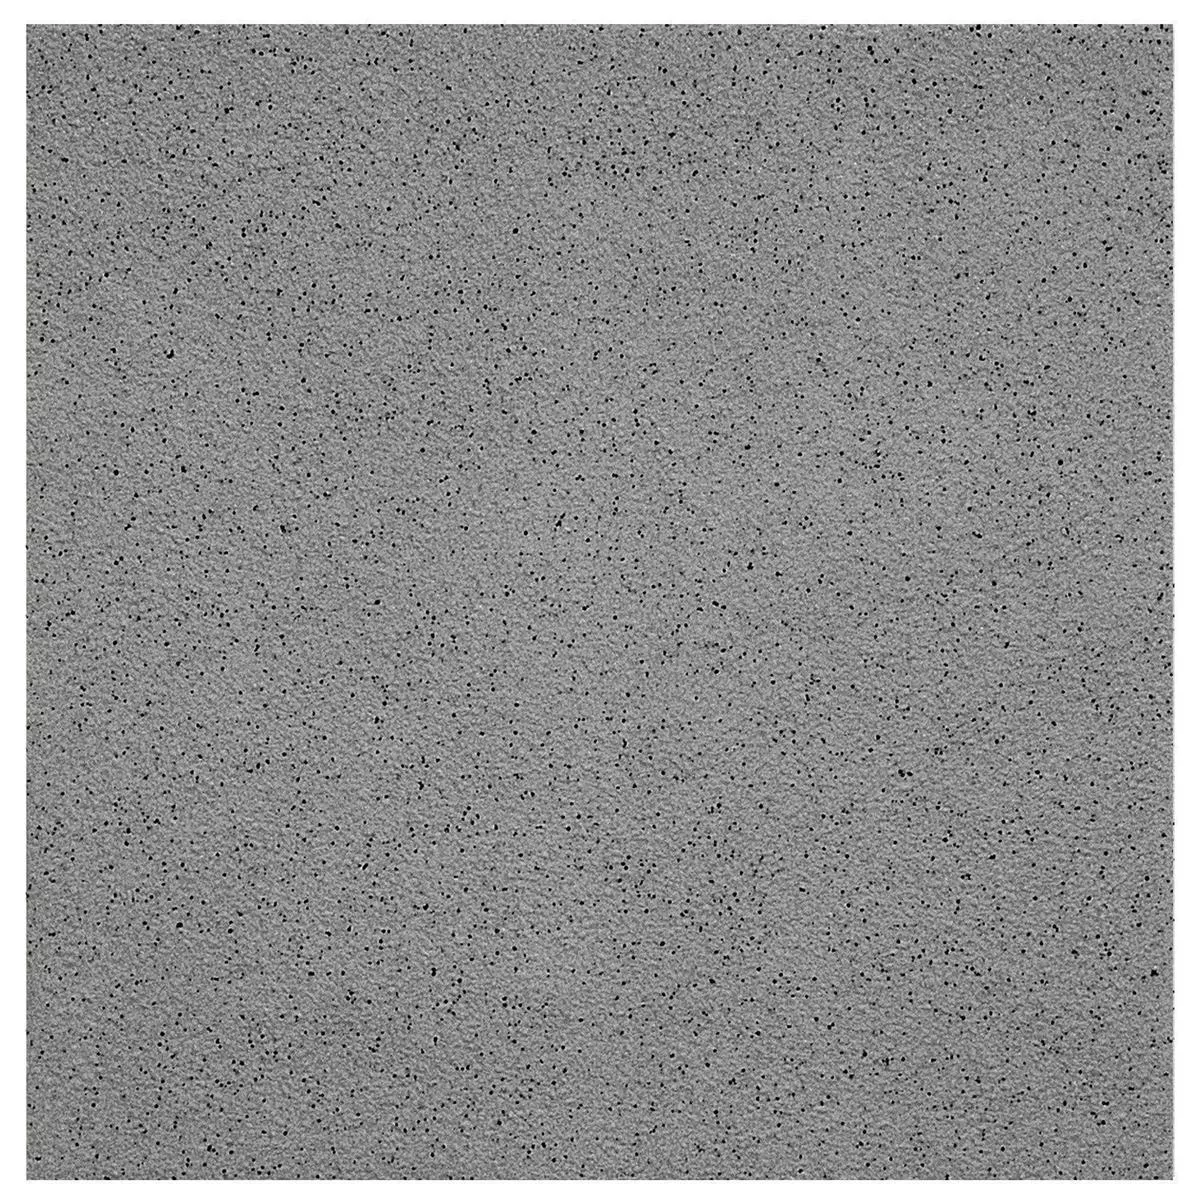 Gresie Grau Bun R11/B Antracit 20x20cm